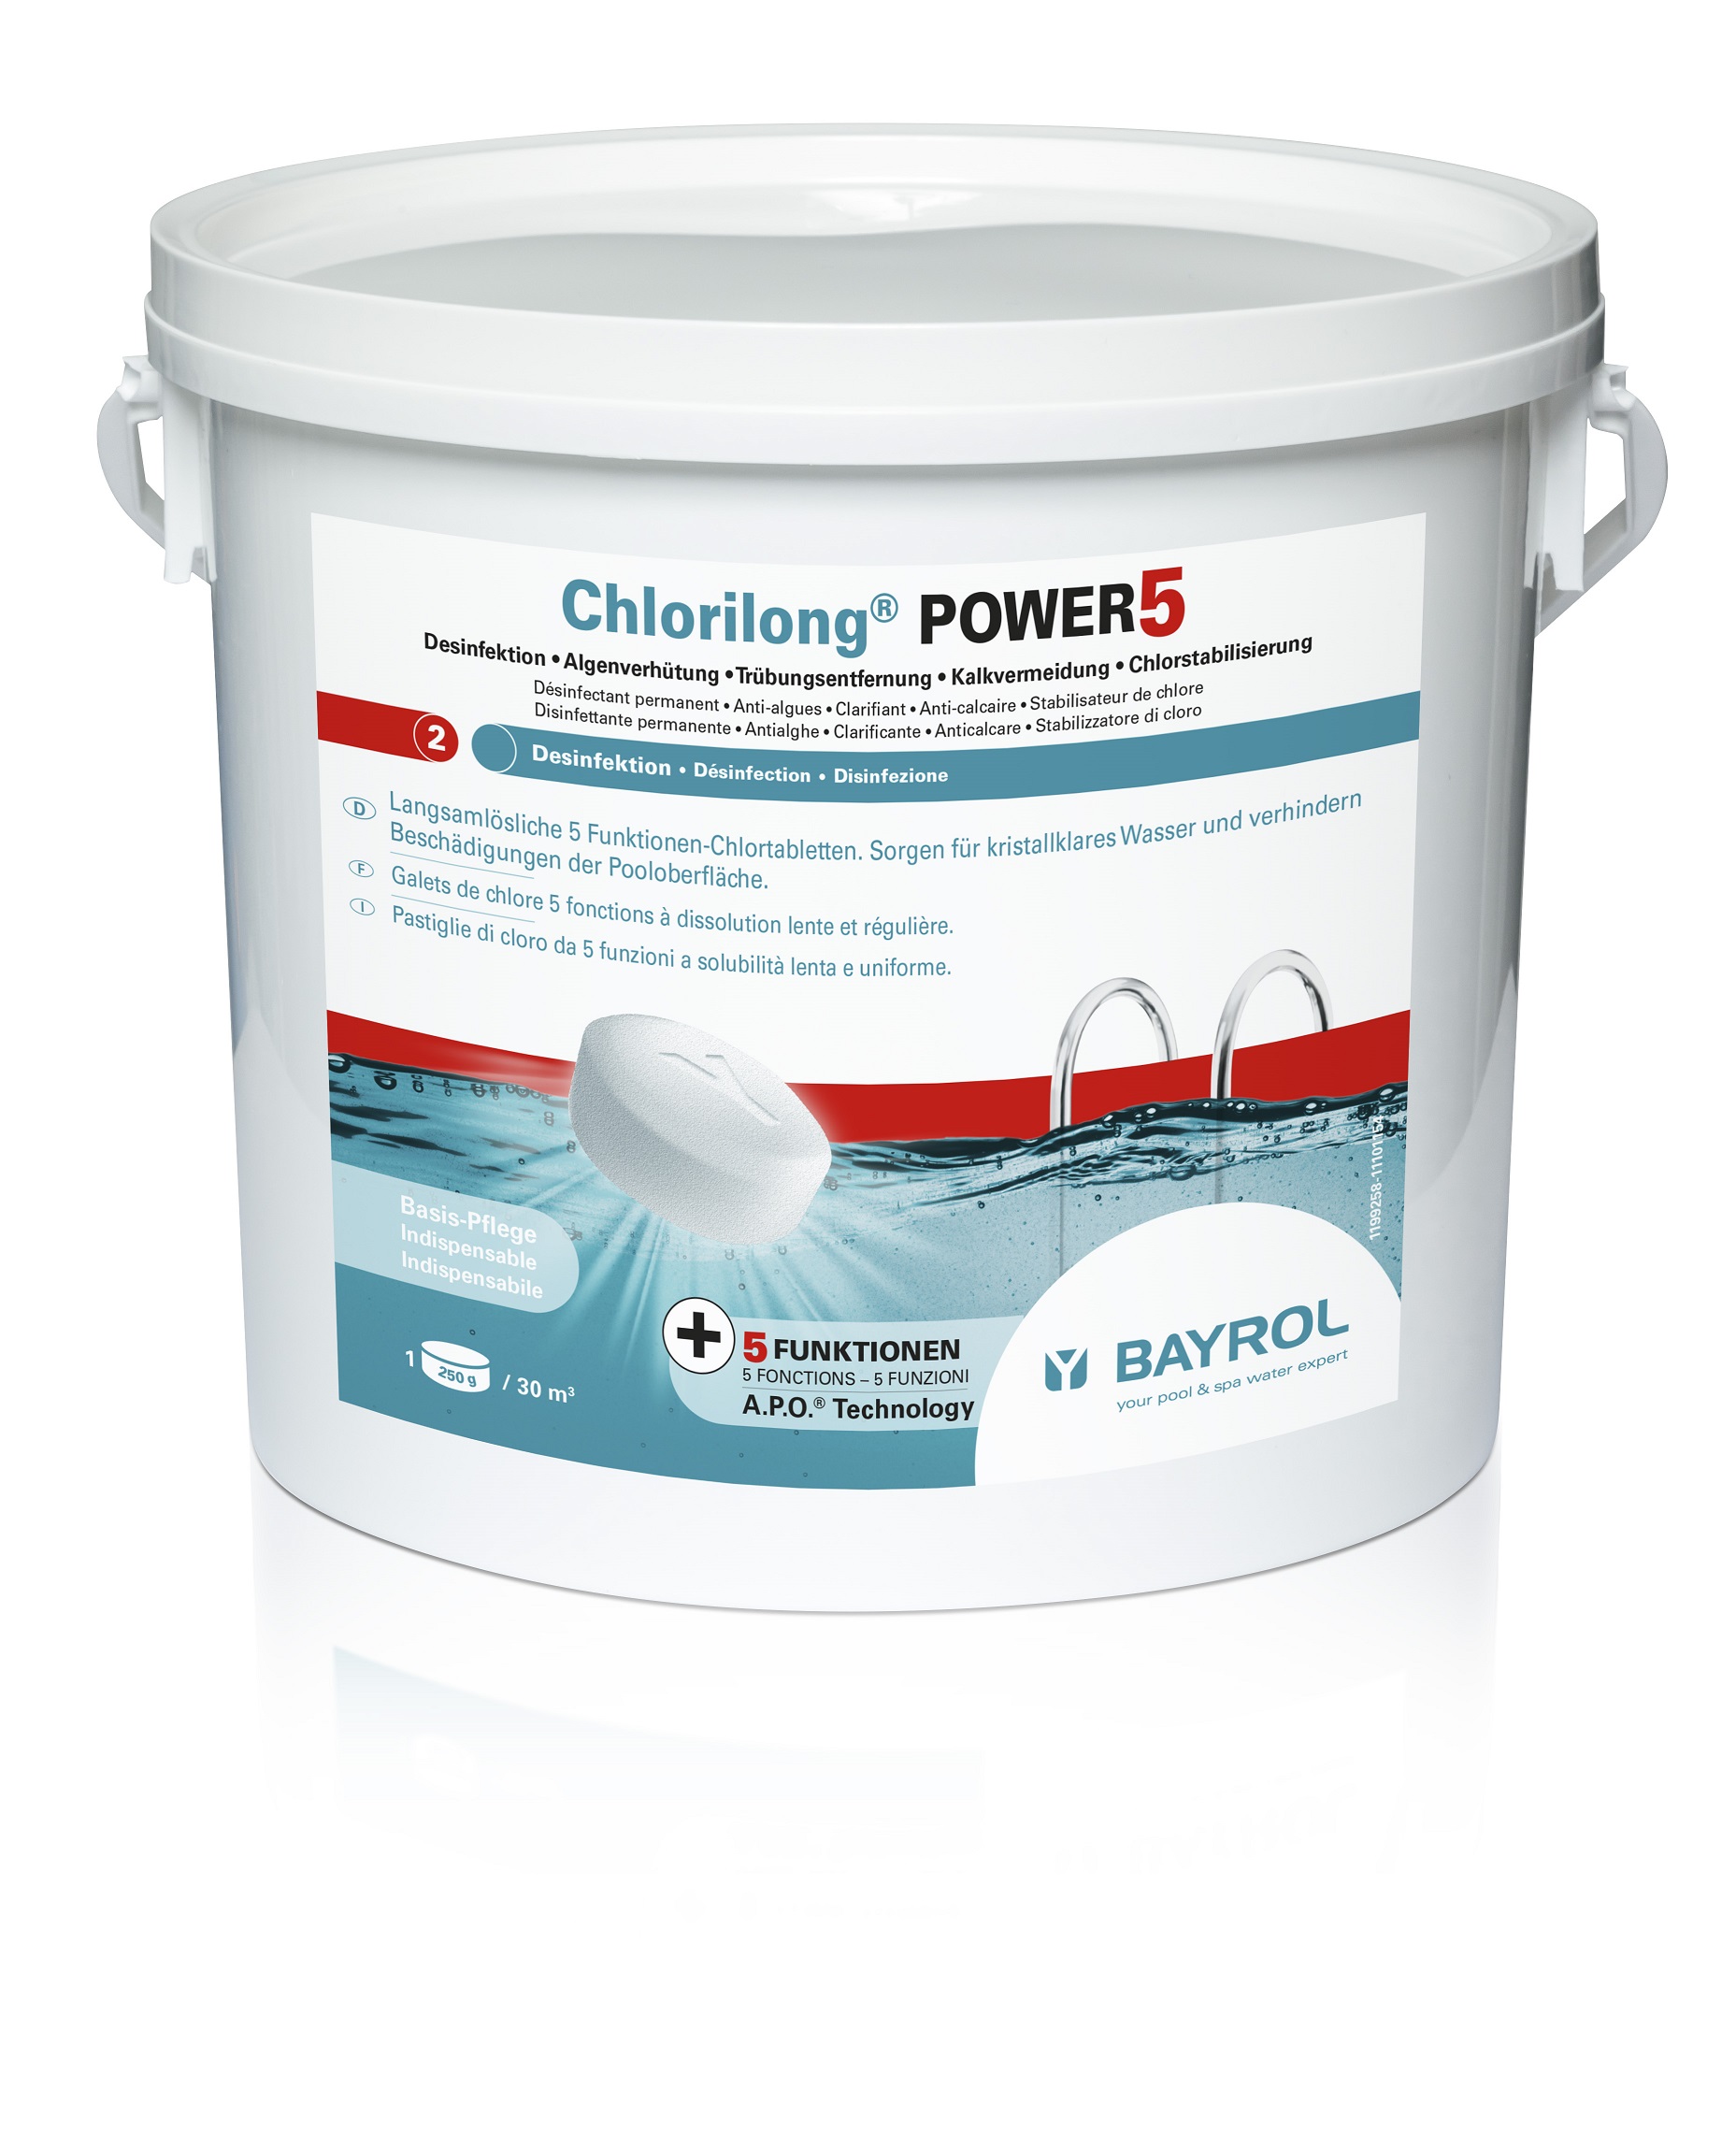 AS-021138 Chlorilong POWER 5 - 5kg 5 Funktionen-Chlortabletten 250 g